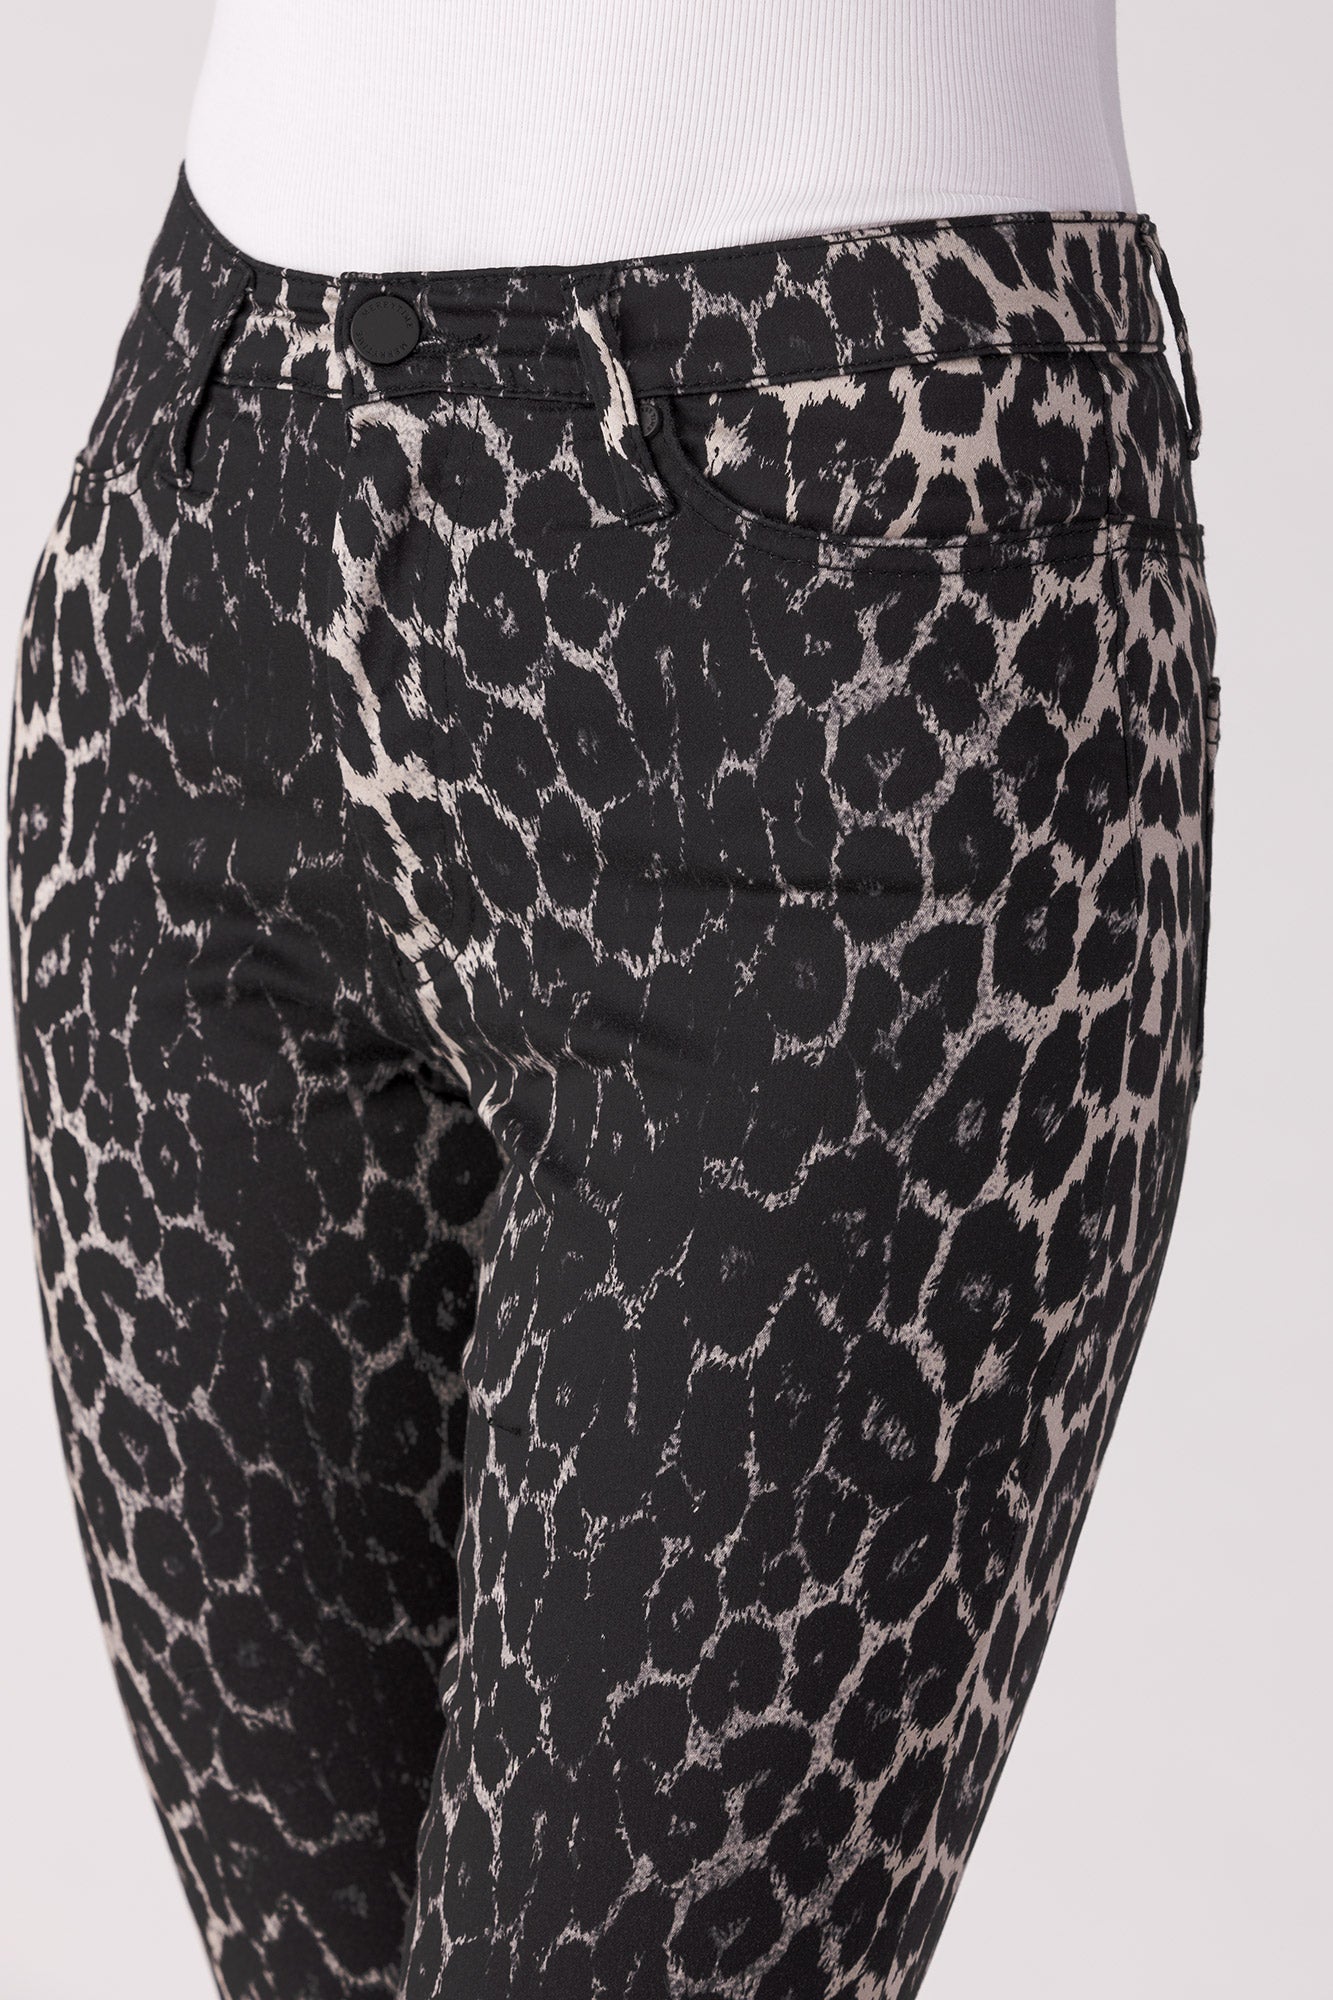 15640-440-07 / Super Slim Ankel, Høj Talje - Mørk Leopard